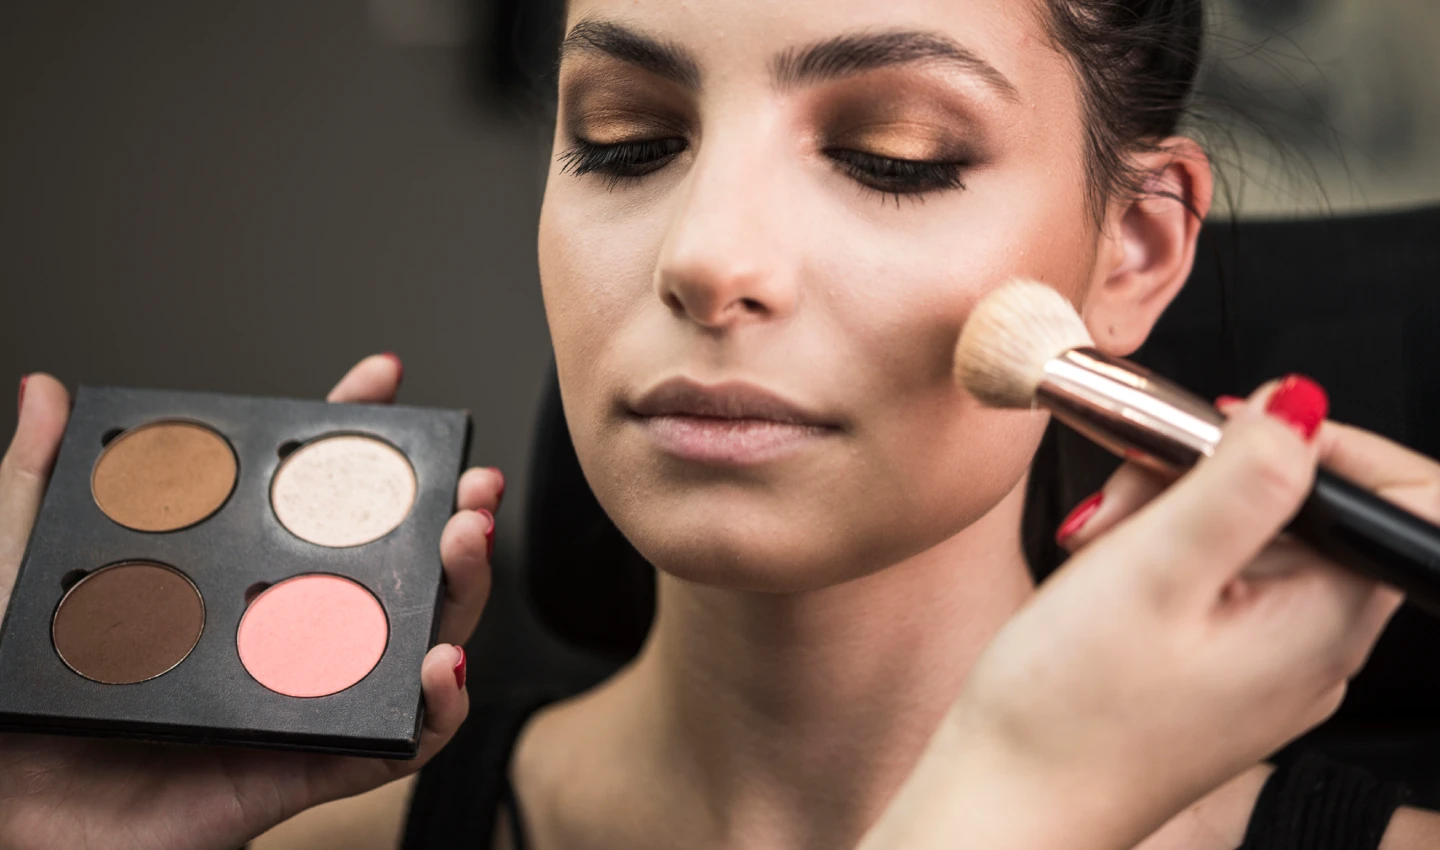 Beautiful model applying blush in a makeup studio - Perfect Blush Application